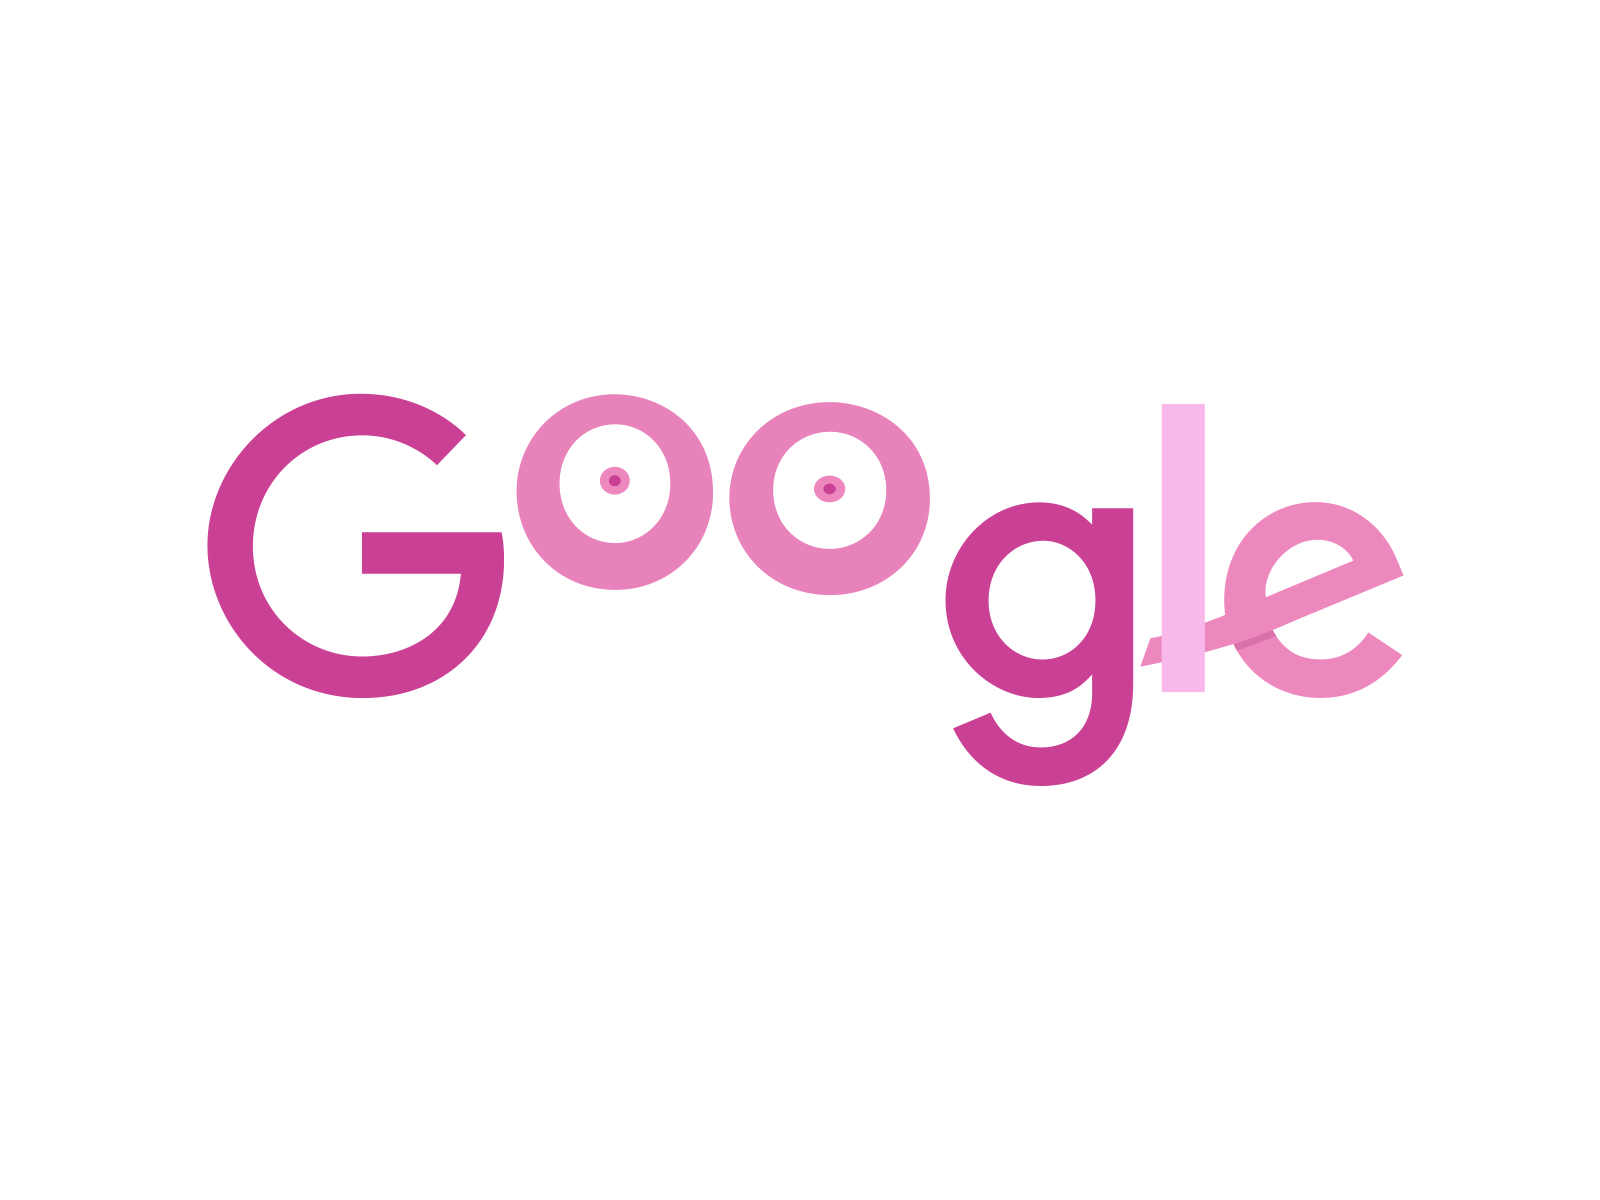 Google Pink October